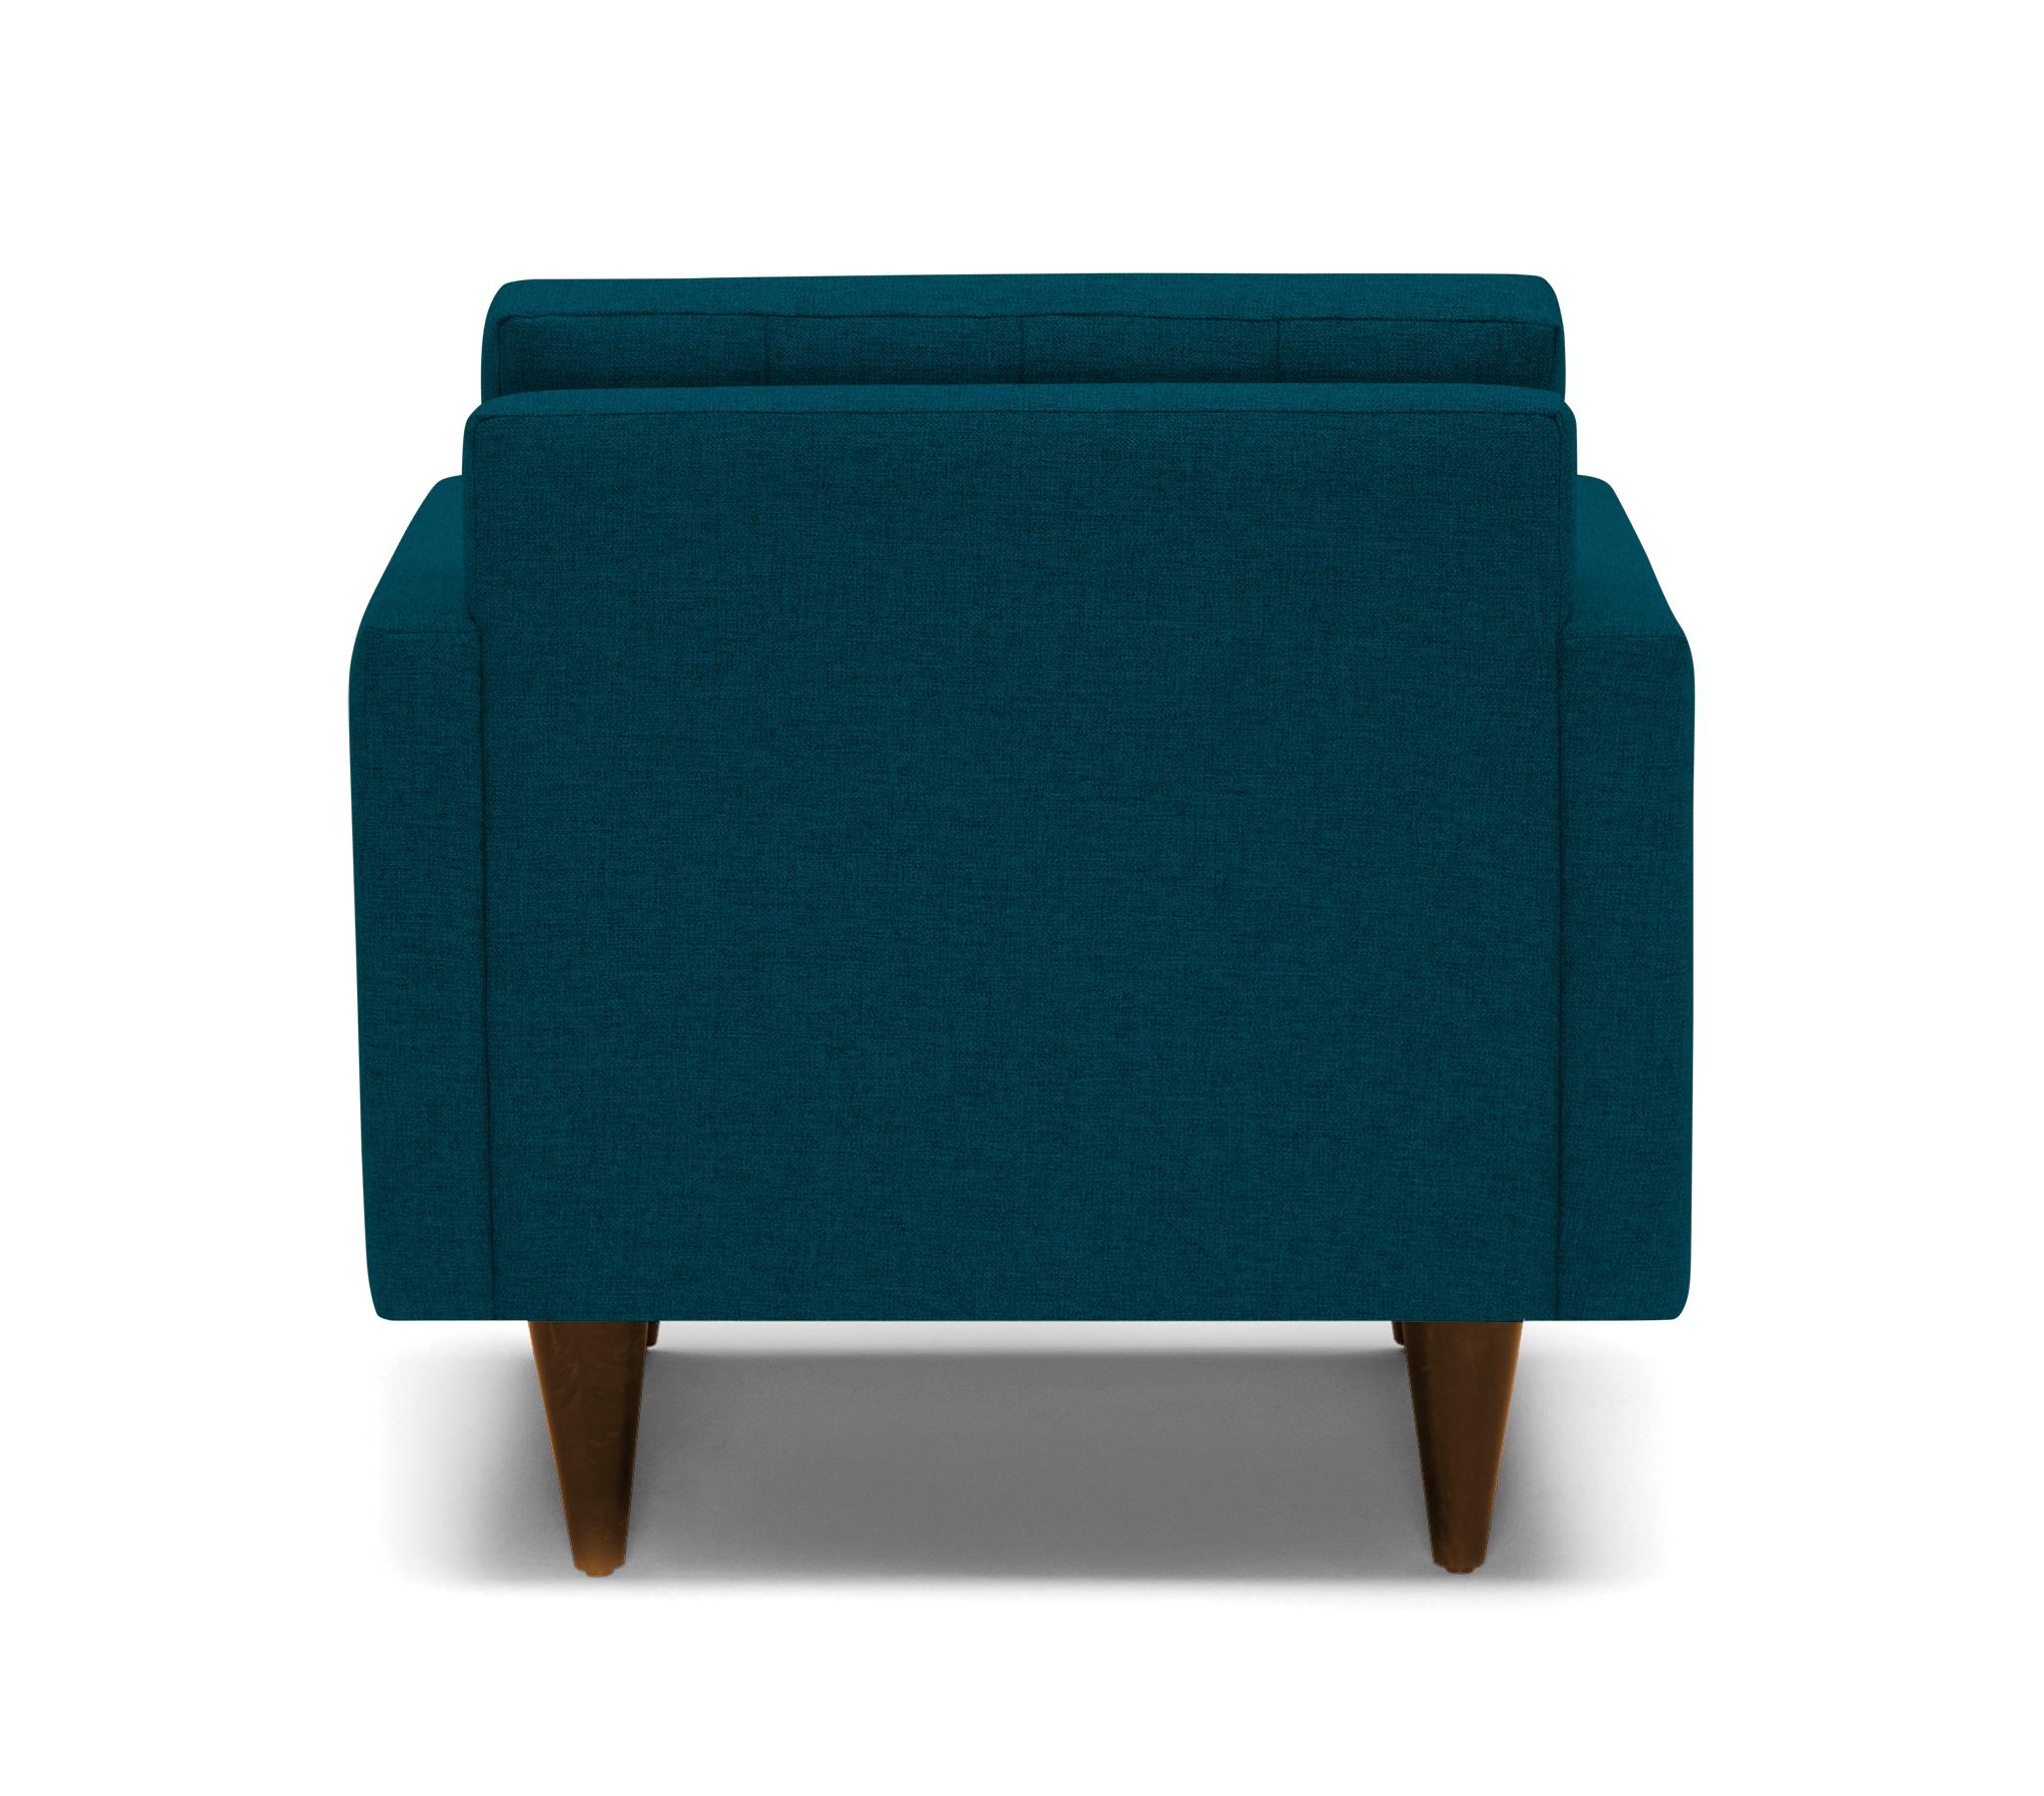 Blue Eliot Mid Century Modern Apartment Chair - Key Largo Zenith Teal - Mocha - Image 4